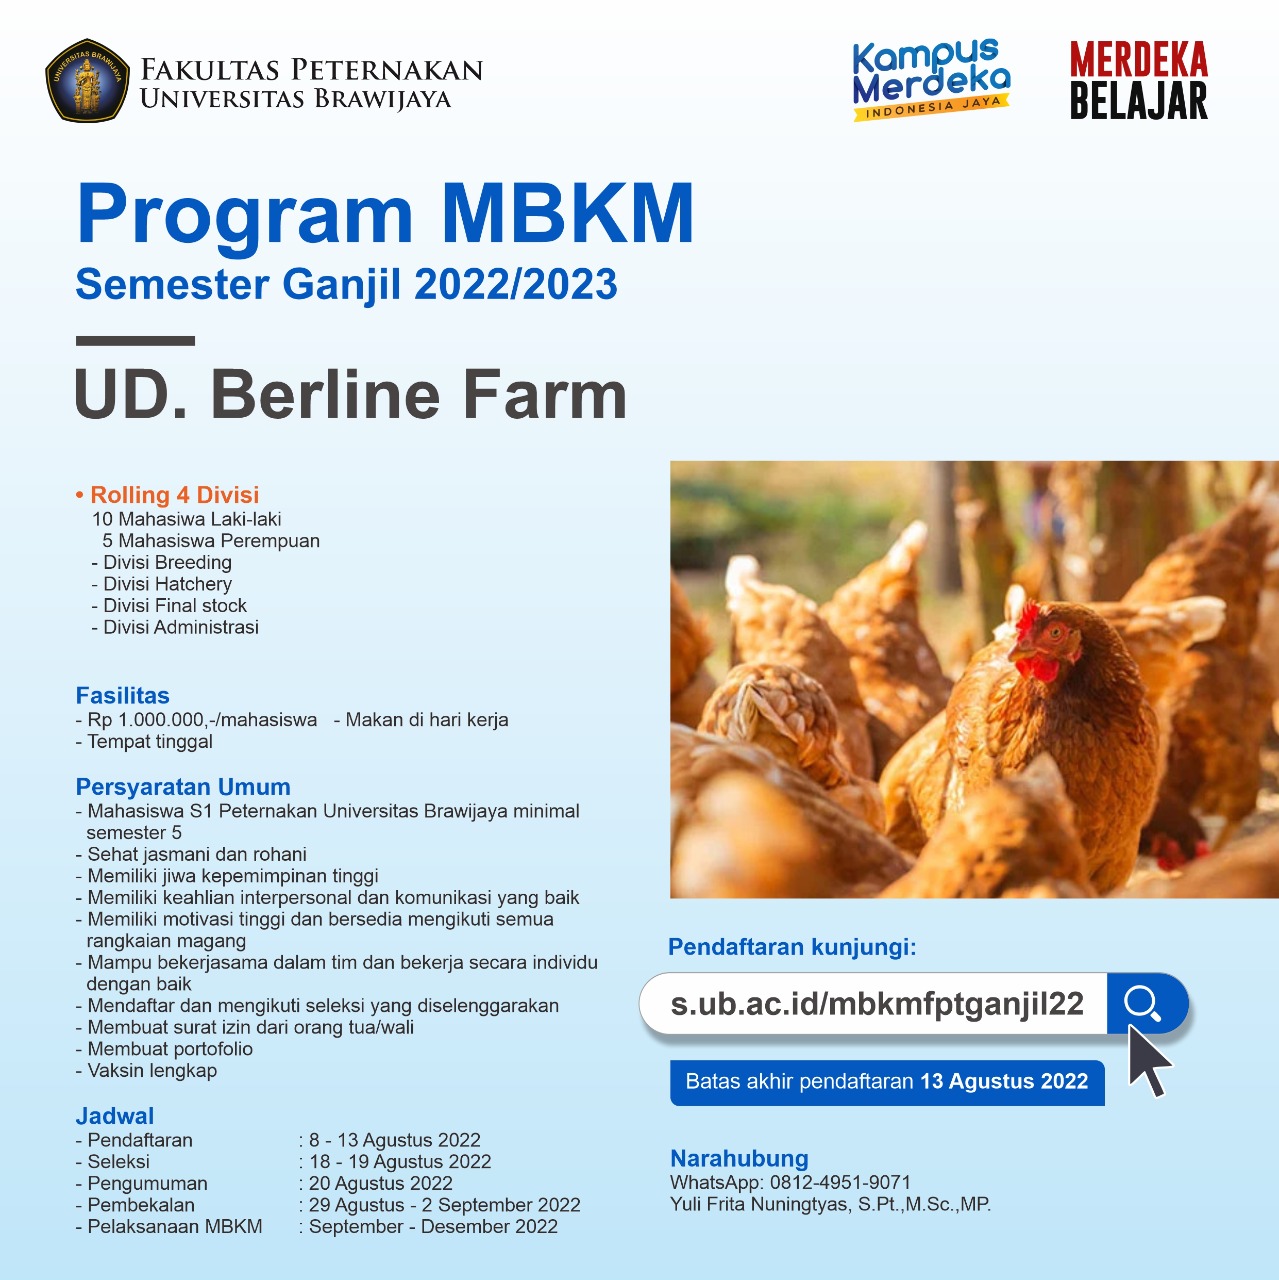 MBKM Program Odd Semester 2022/2023 UD. Berline Farm